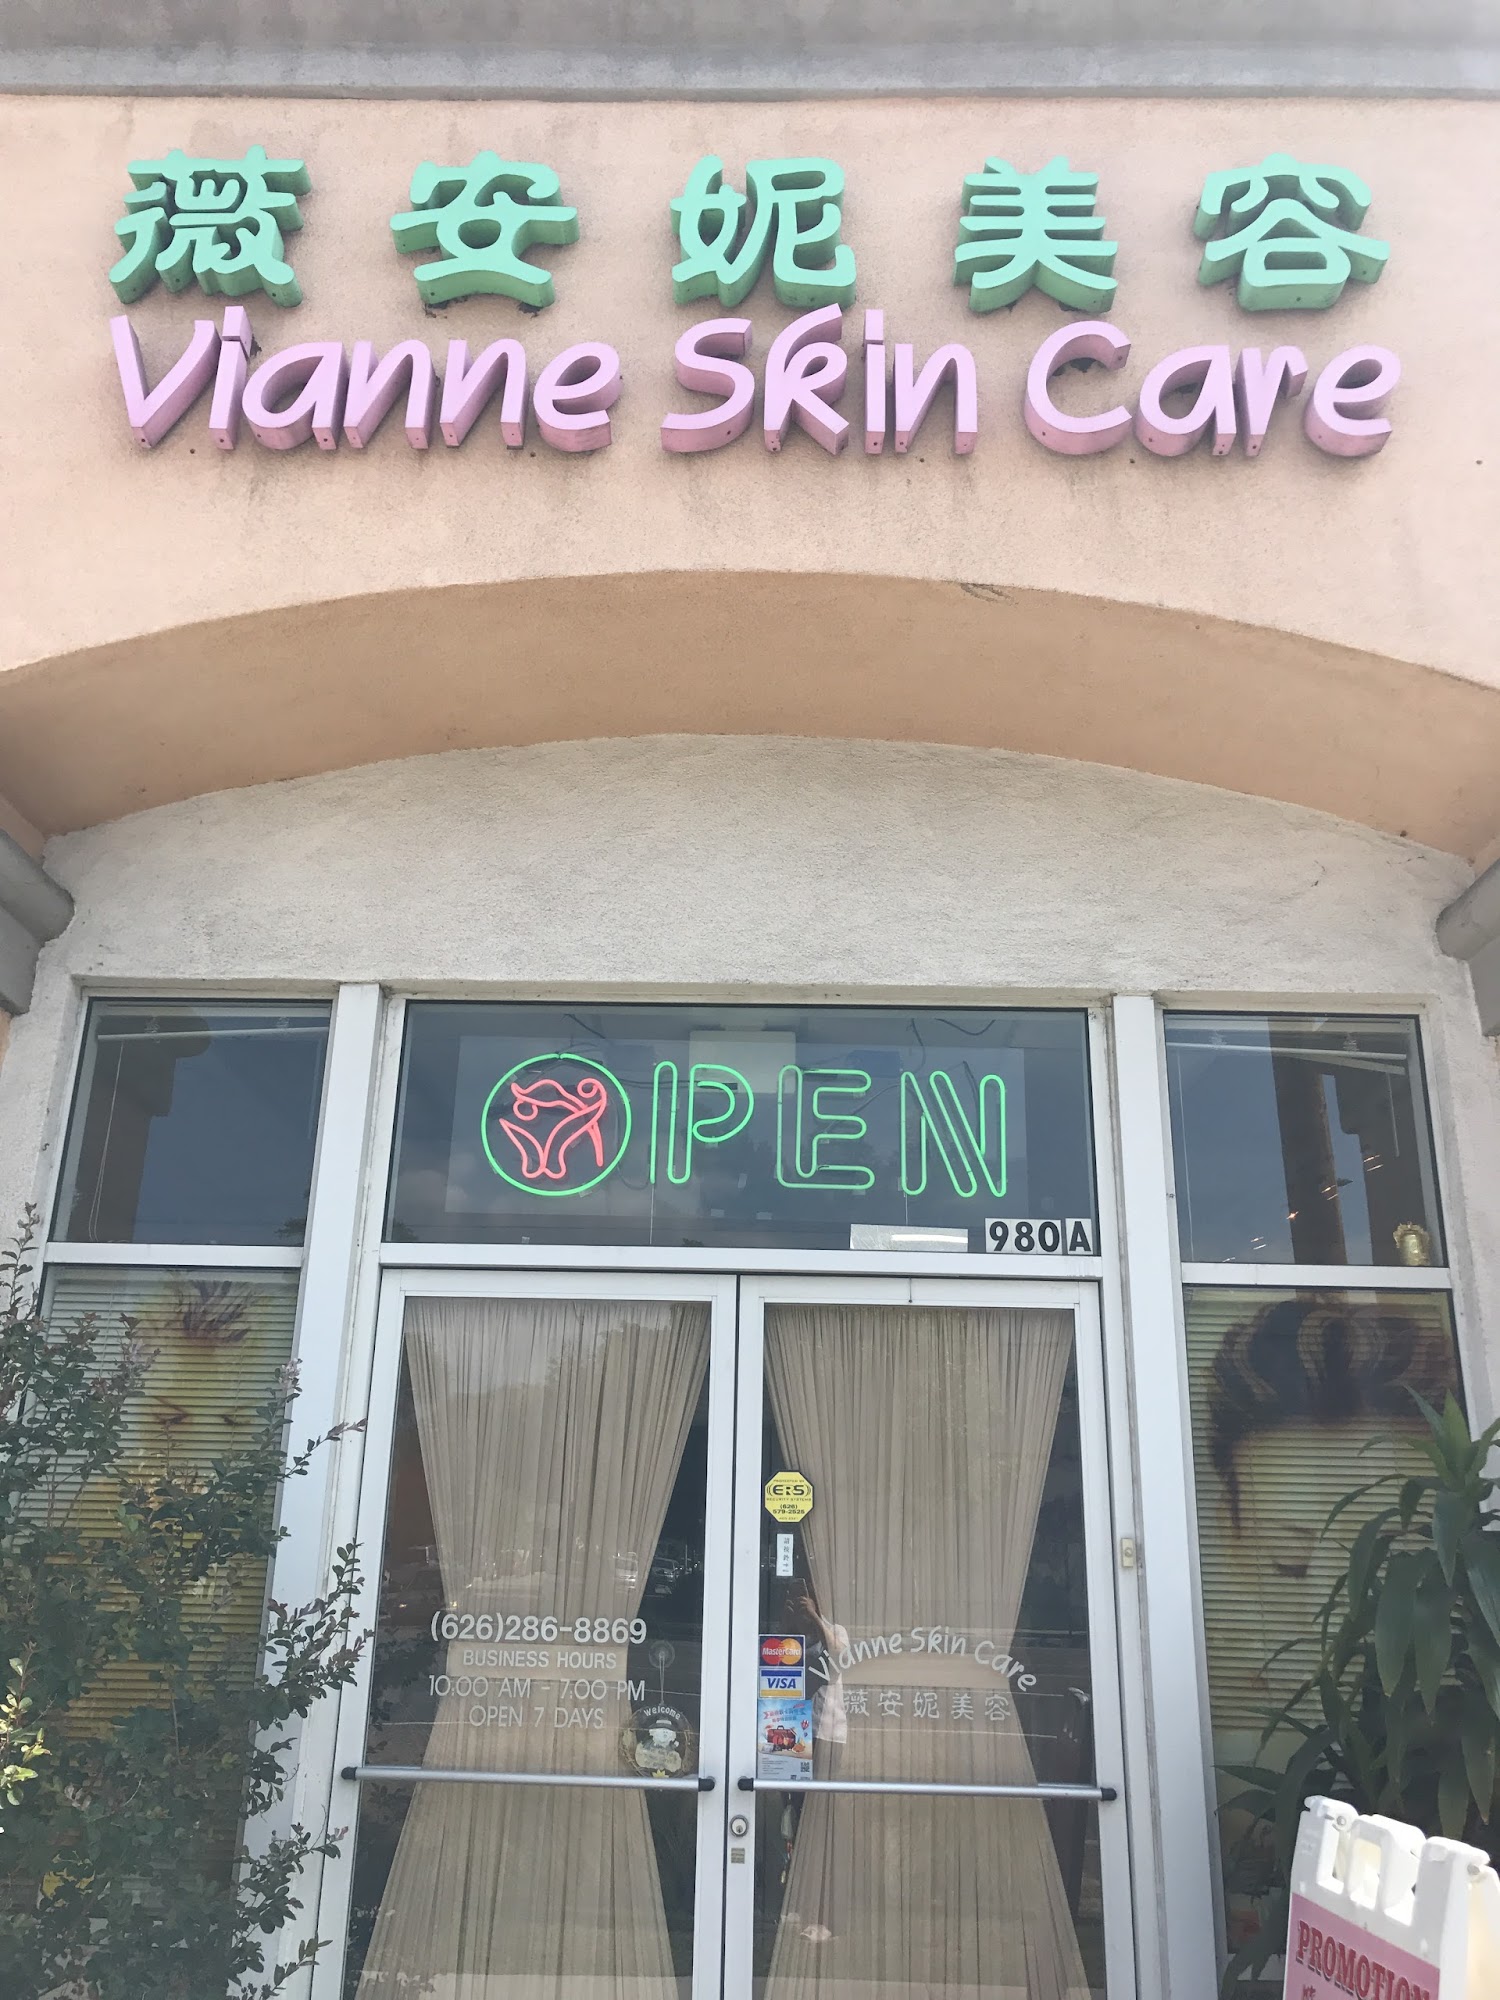 Vianne Skin Care